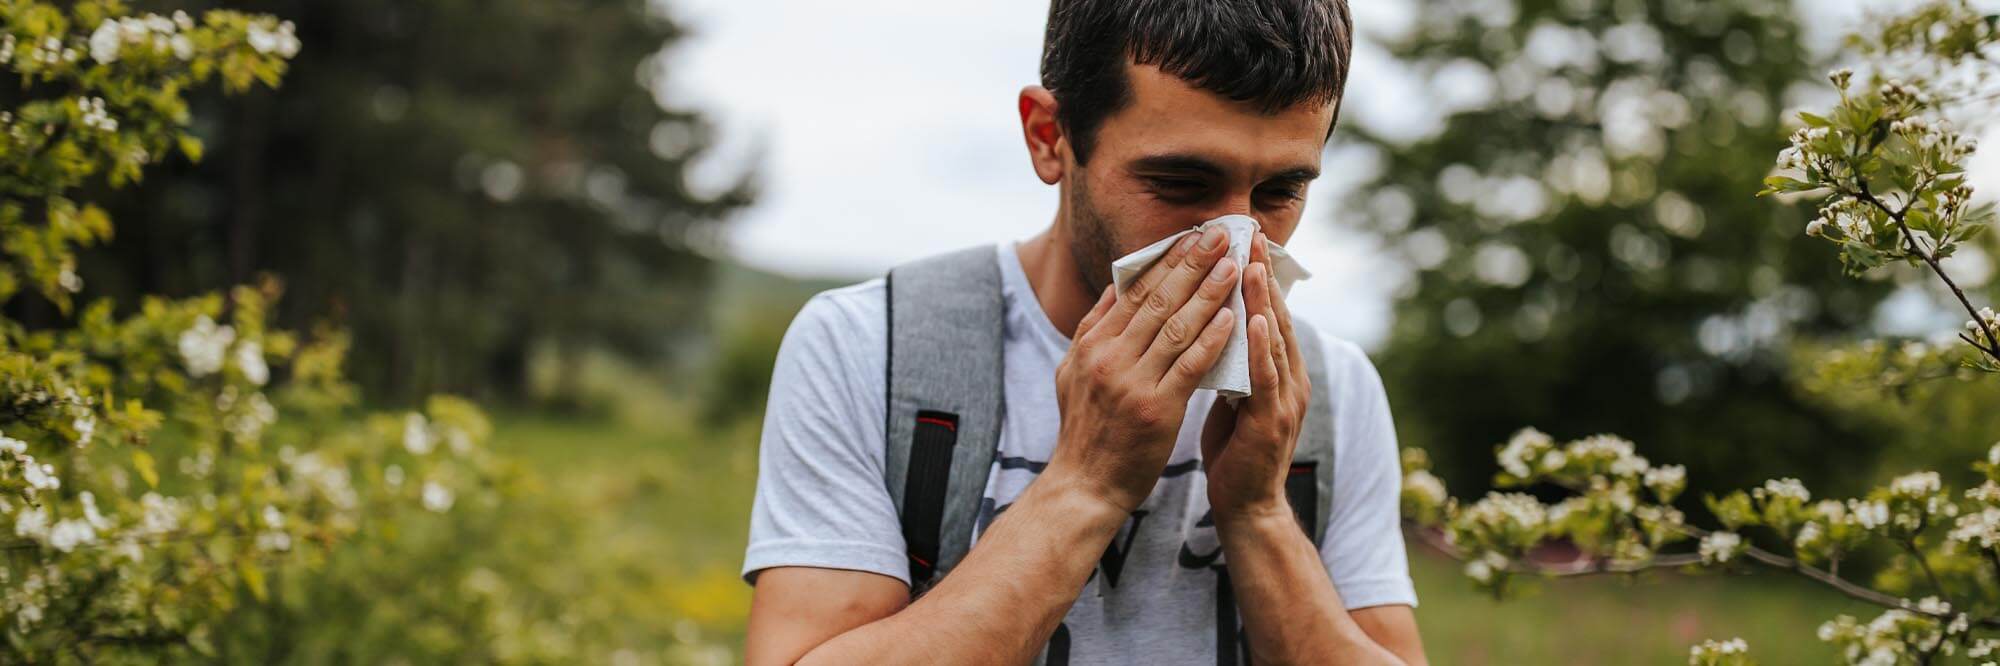 Seasonal allergy symptoms, causes & peak times | HealthPartners ...